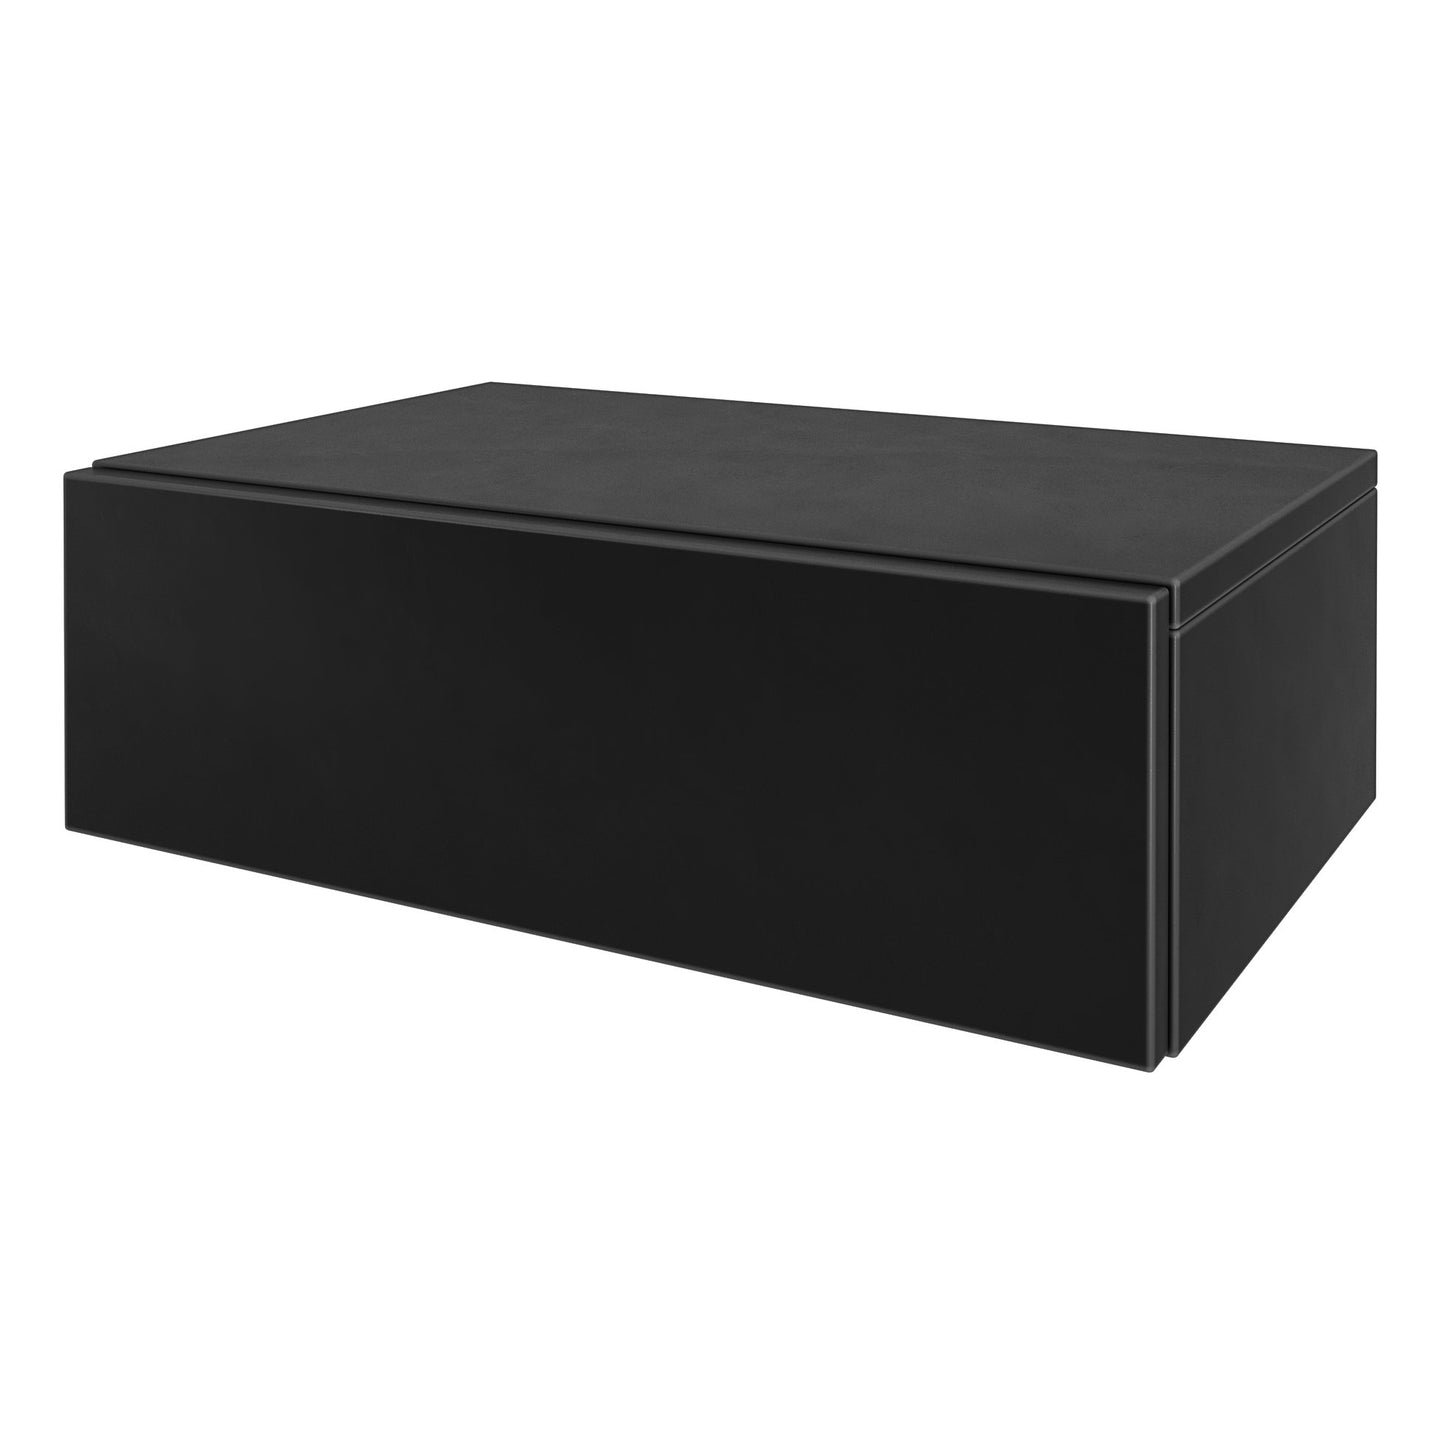 Nancy's Frisco Floating drawer bedside table with storage space - White/Black/Beige/Walnut